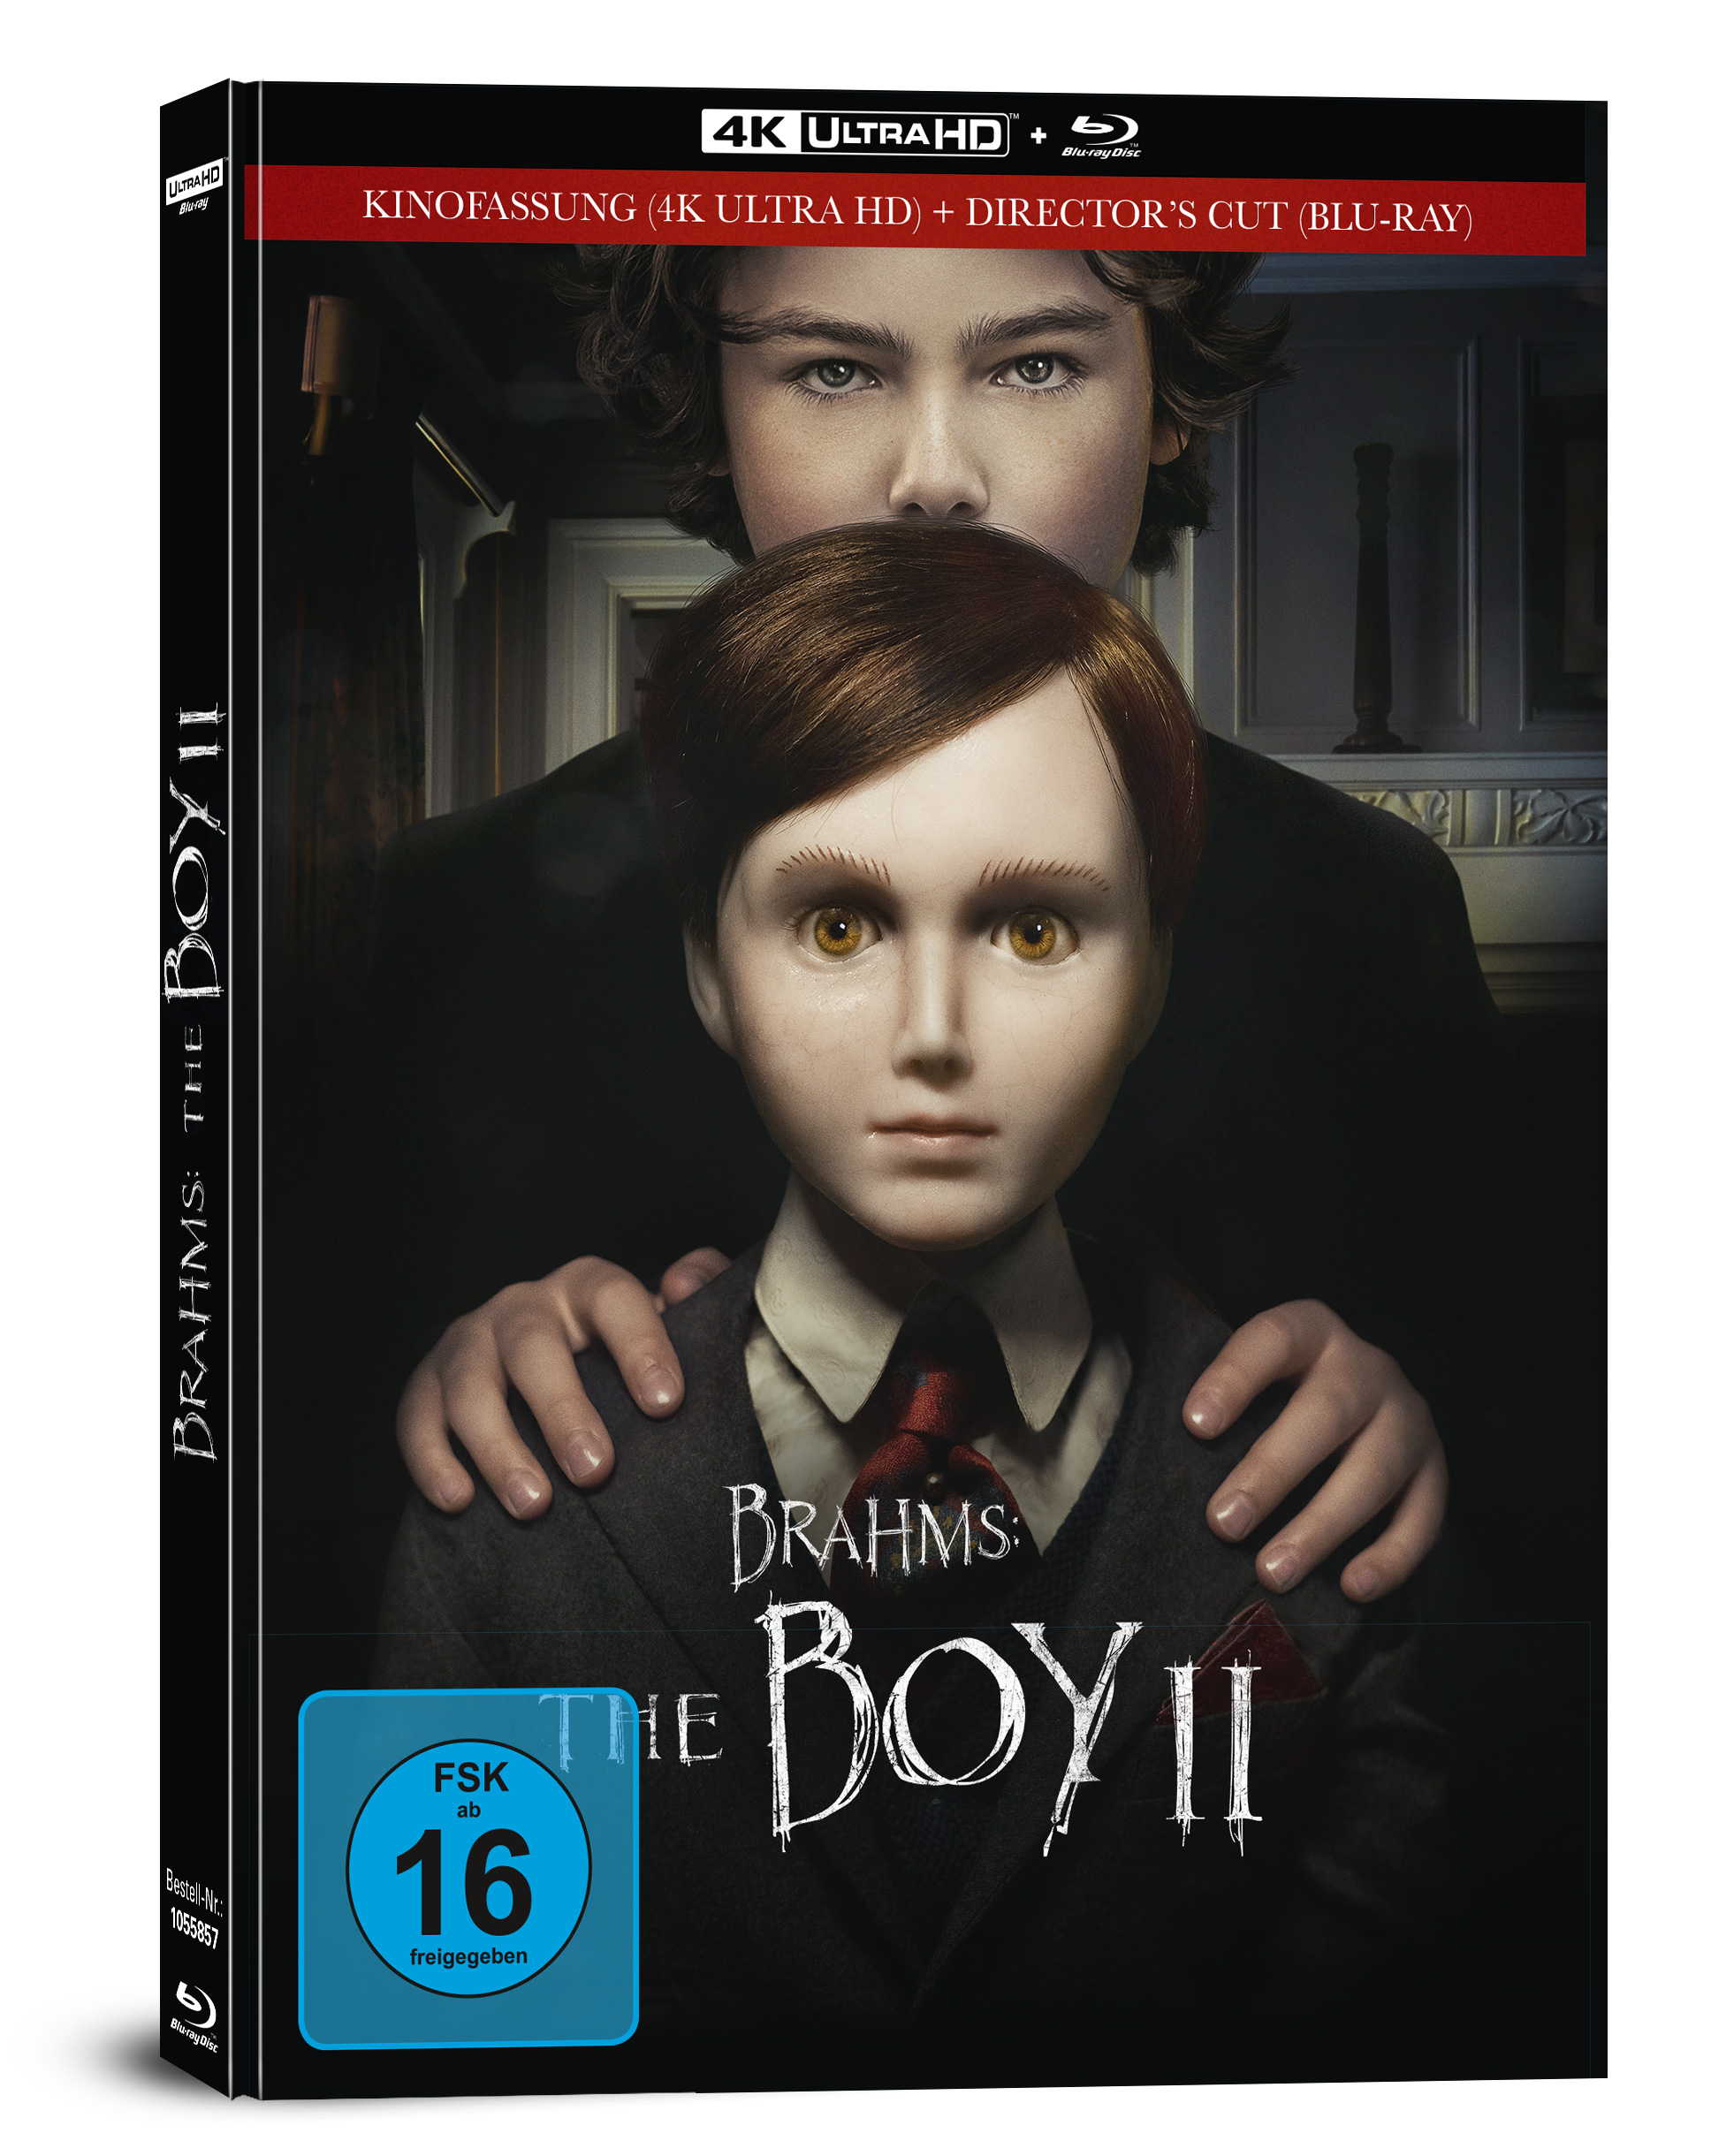 Brahms: The Boy II - 2-Disc Limited Collector's Edition im Mediabook (4K UHD + Blu-ray)